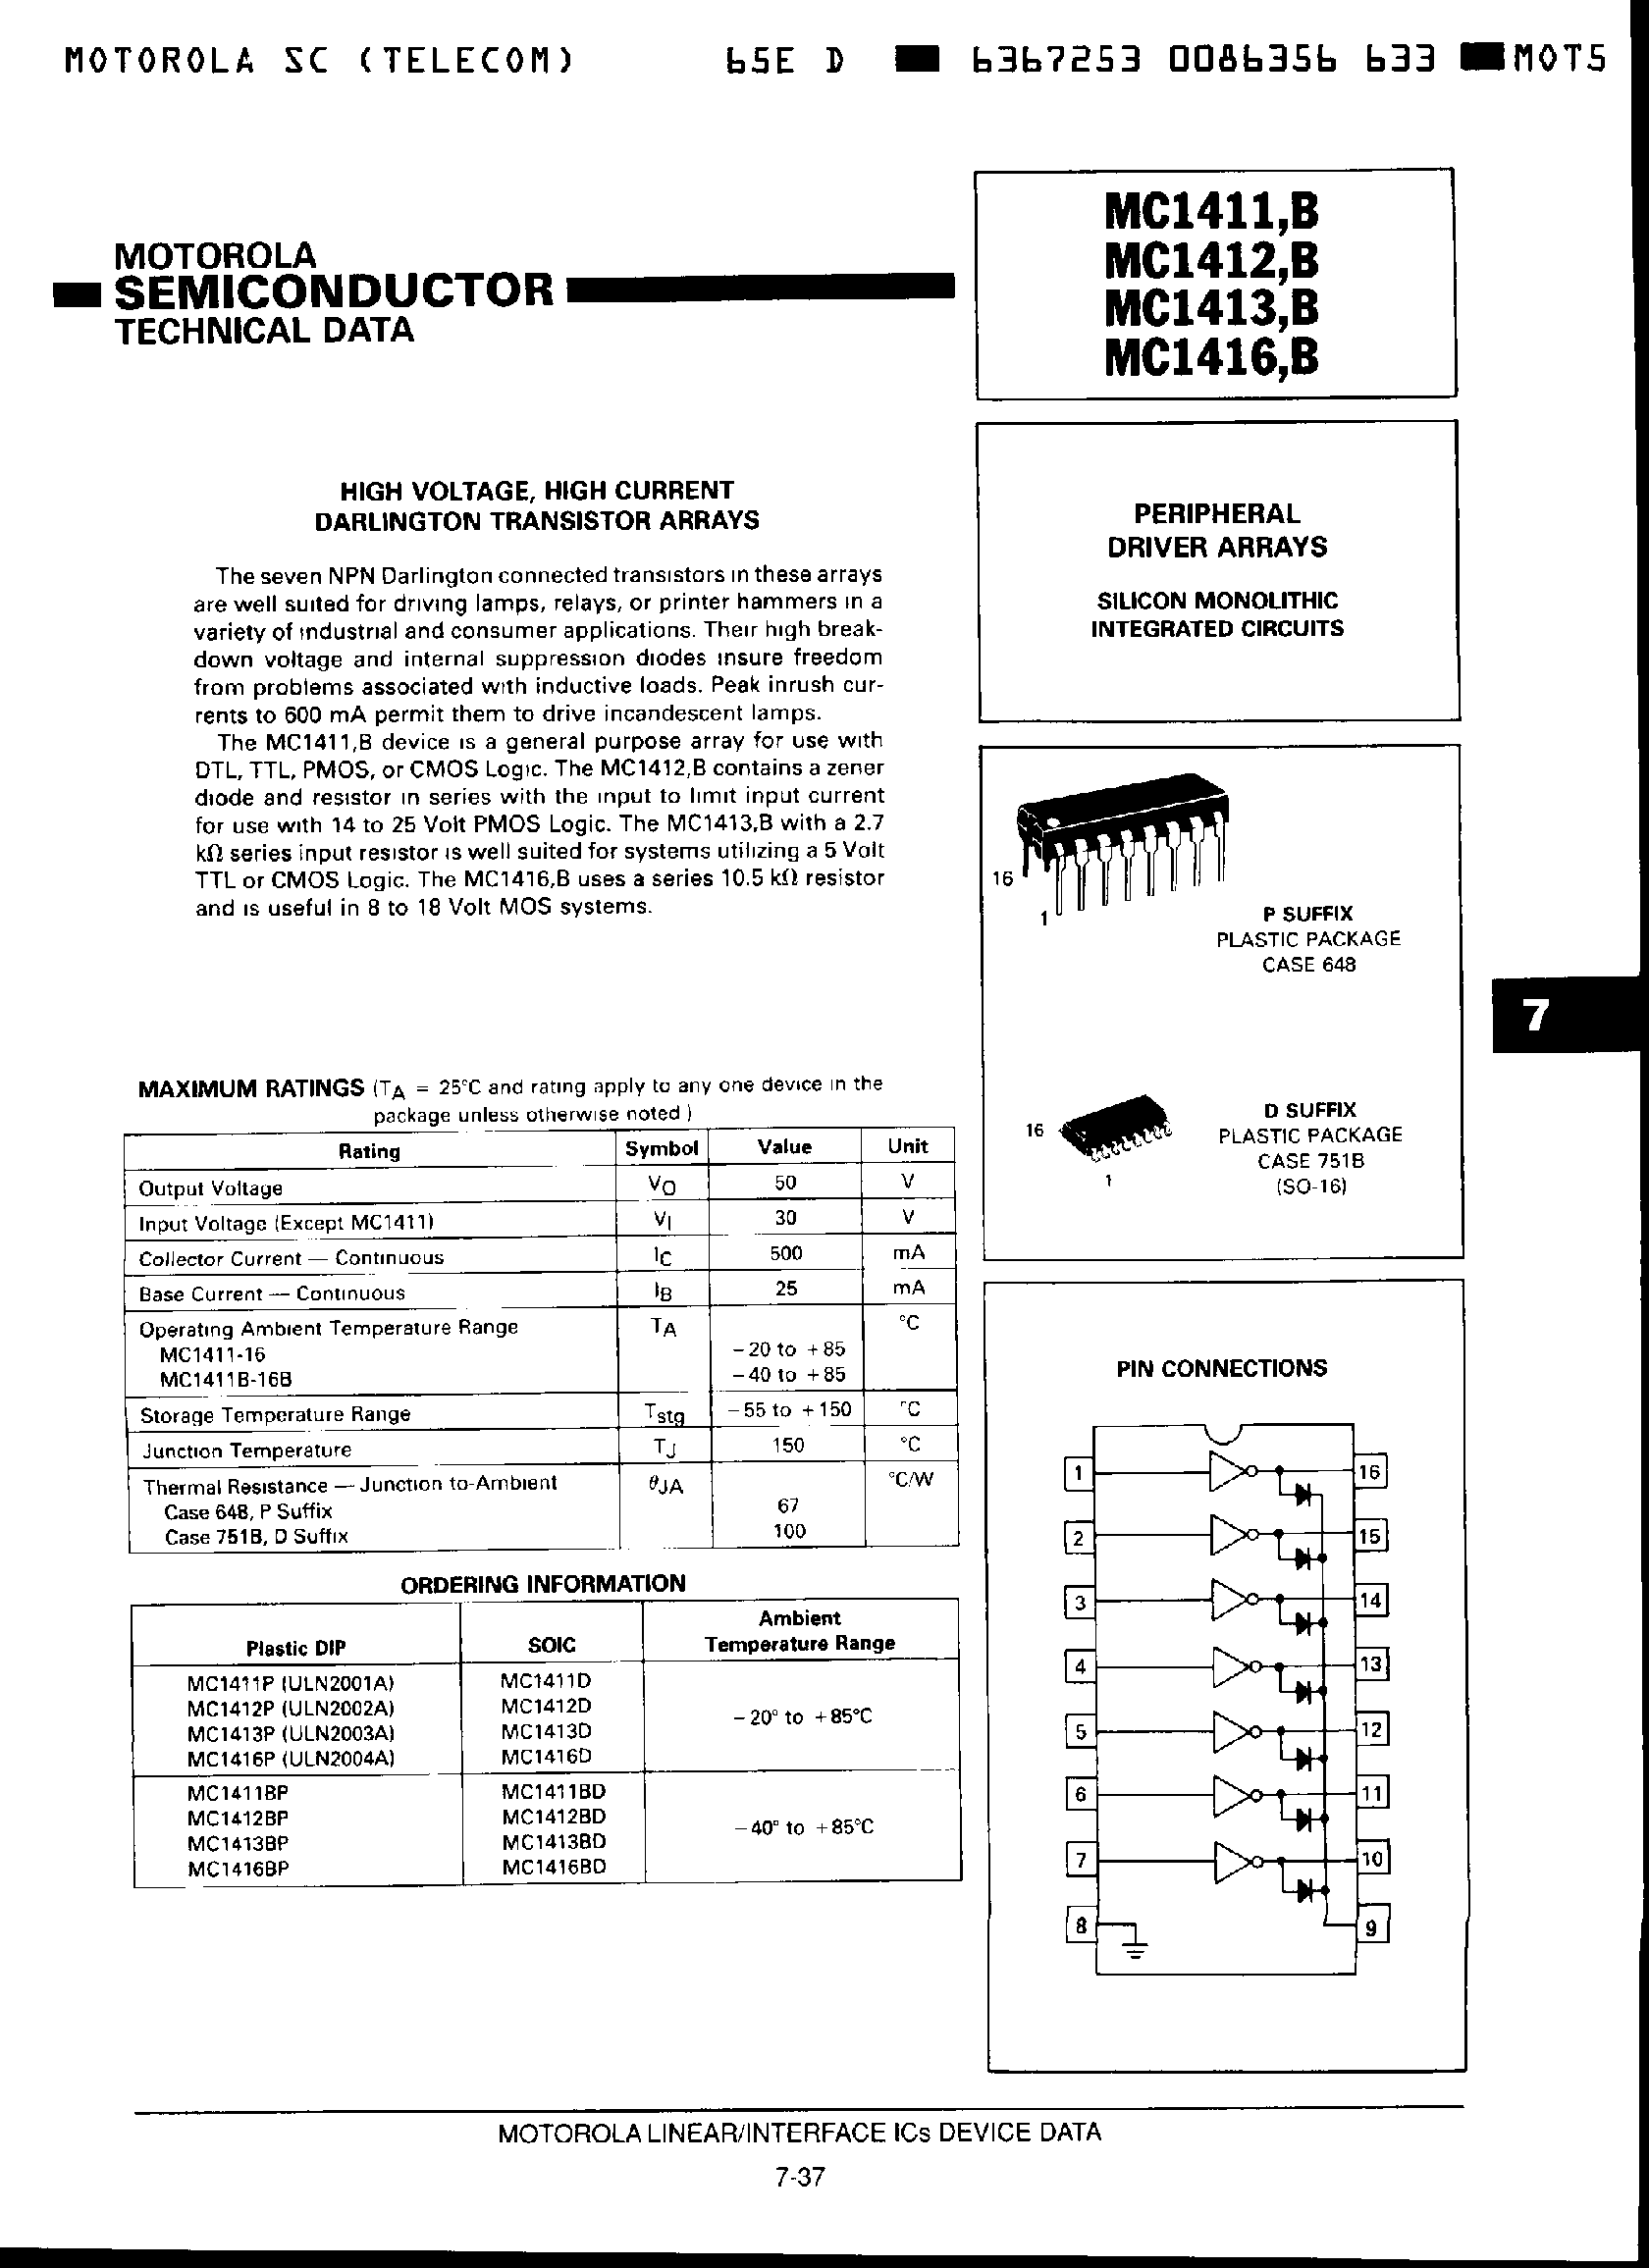 Datasheet MC1412D - PERIPHERAL DRIVER ARRAYS page 1